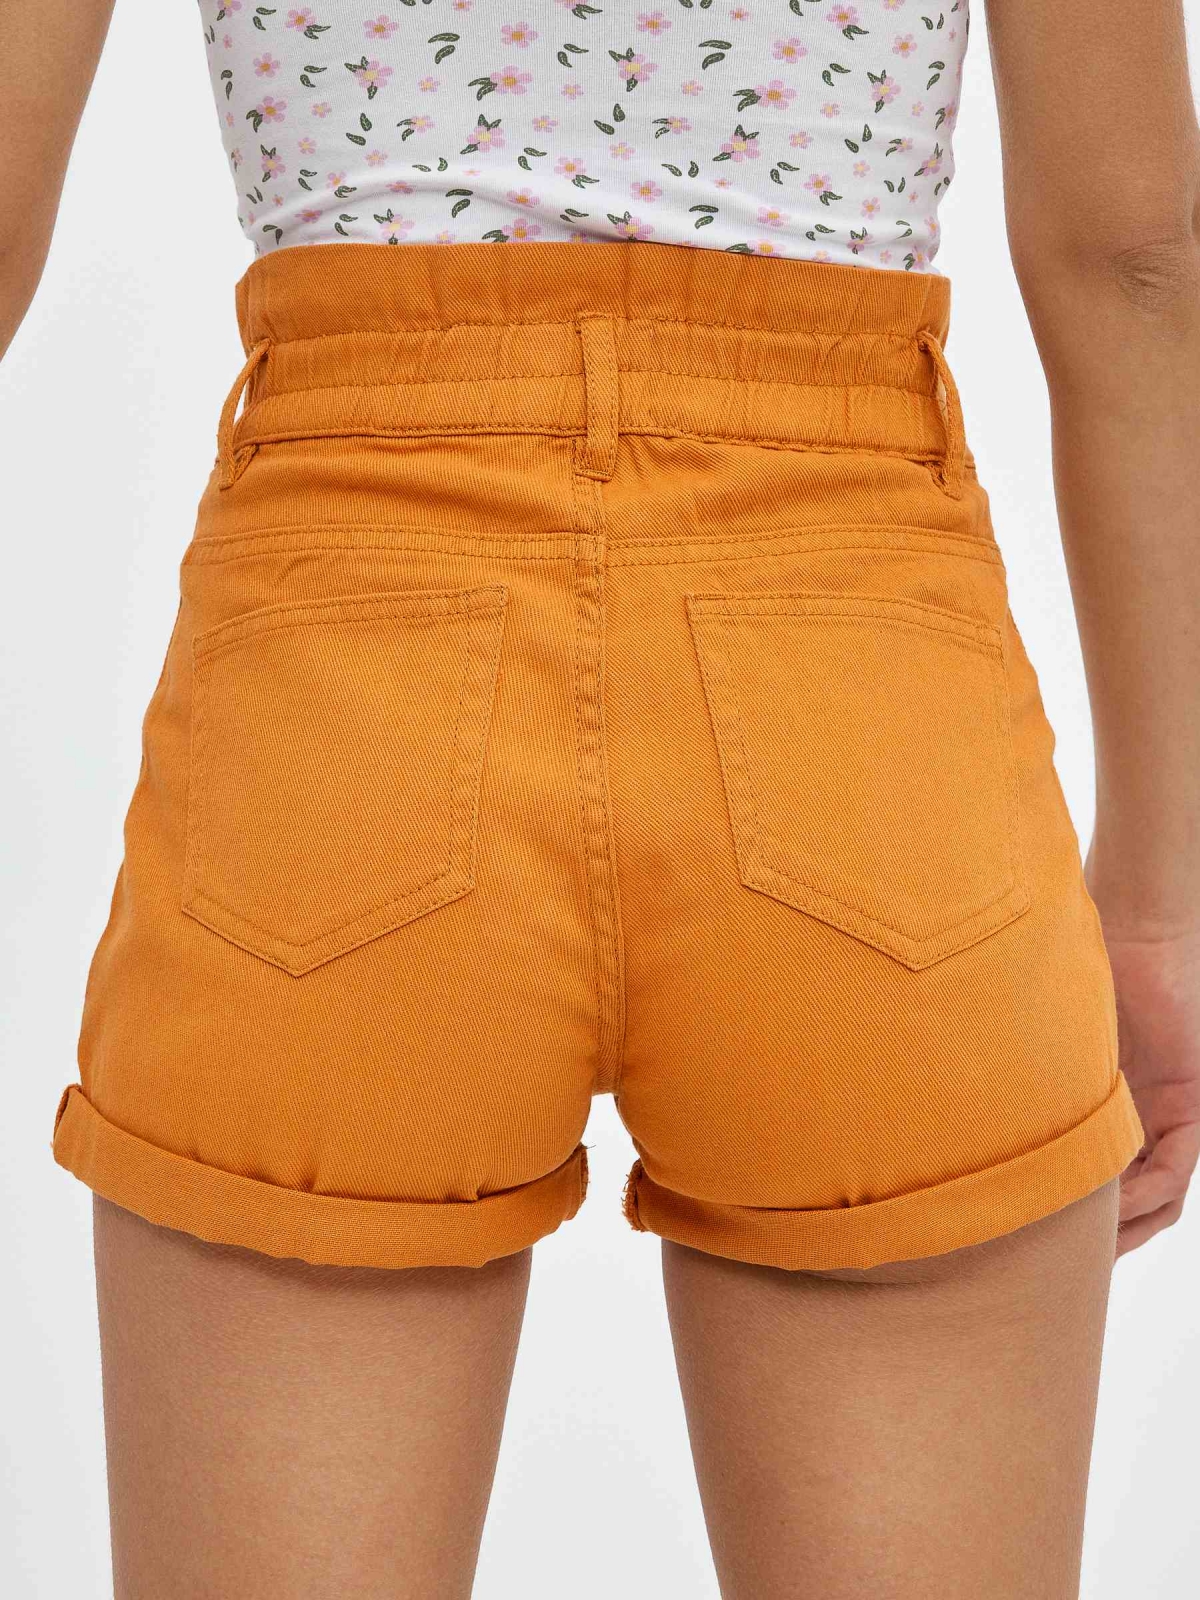 Shorts baggy colorido ocre vista detalhe